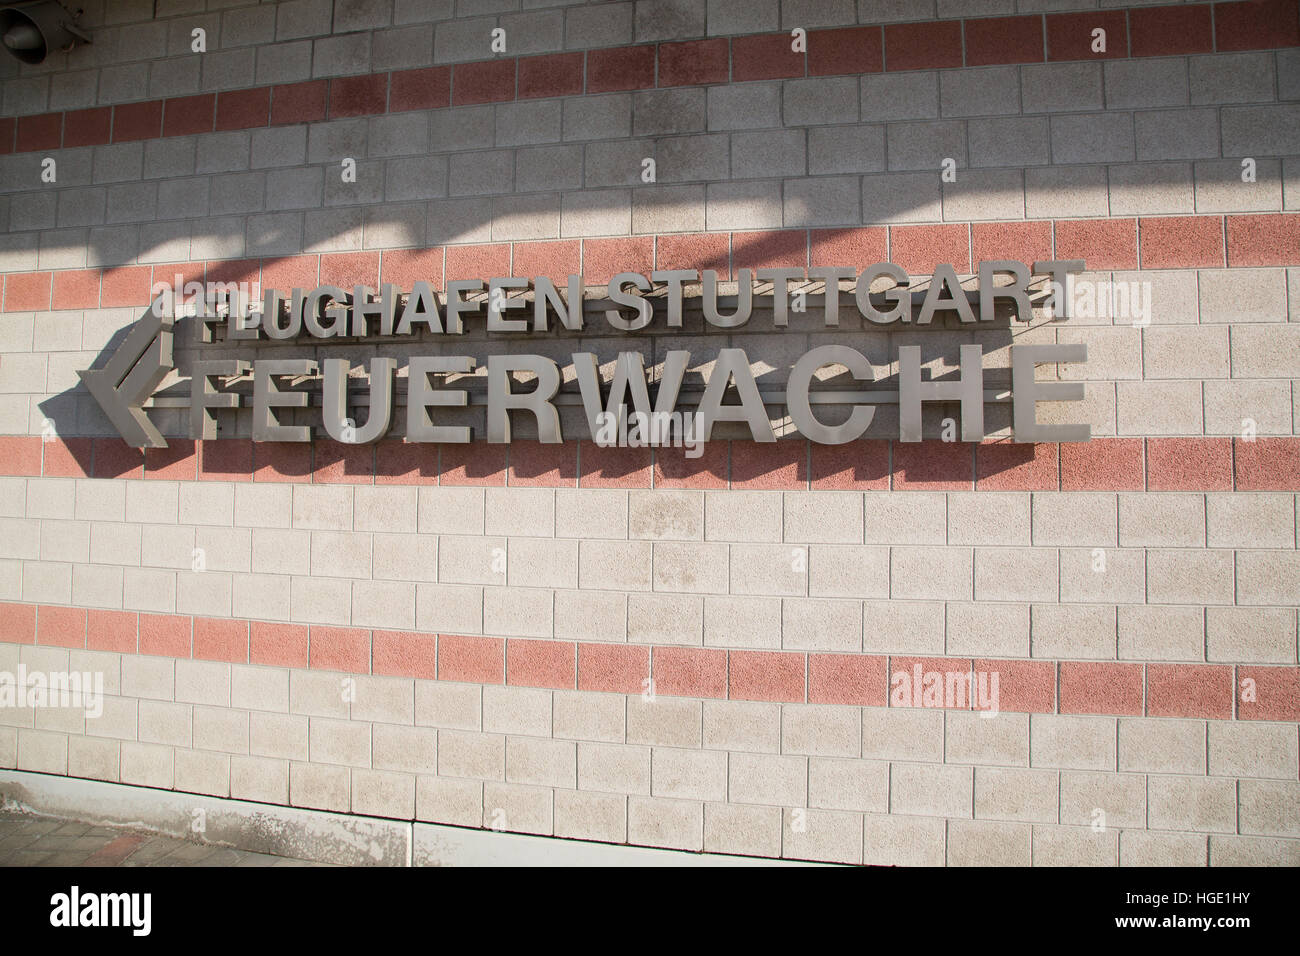 The fire station at Stuttgart Airport in Stuttgart, Germany. Stock Photo